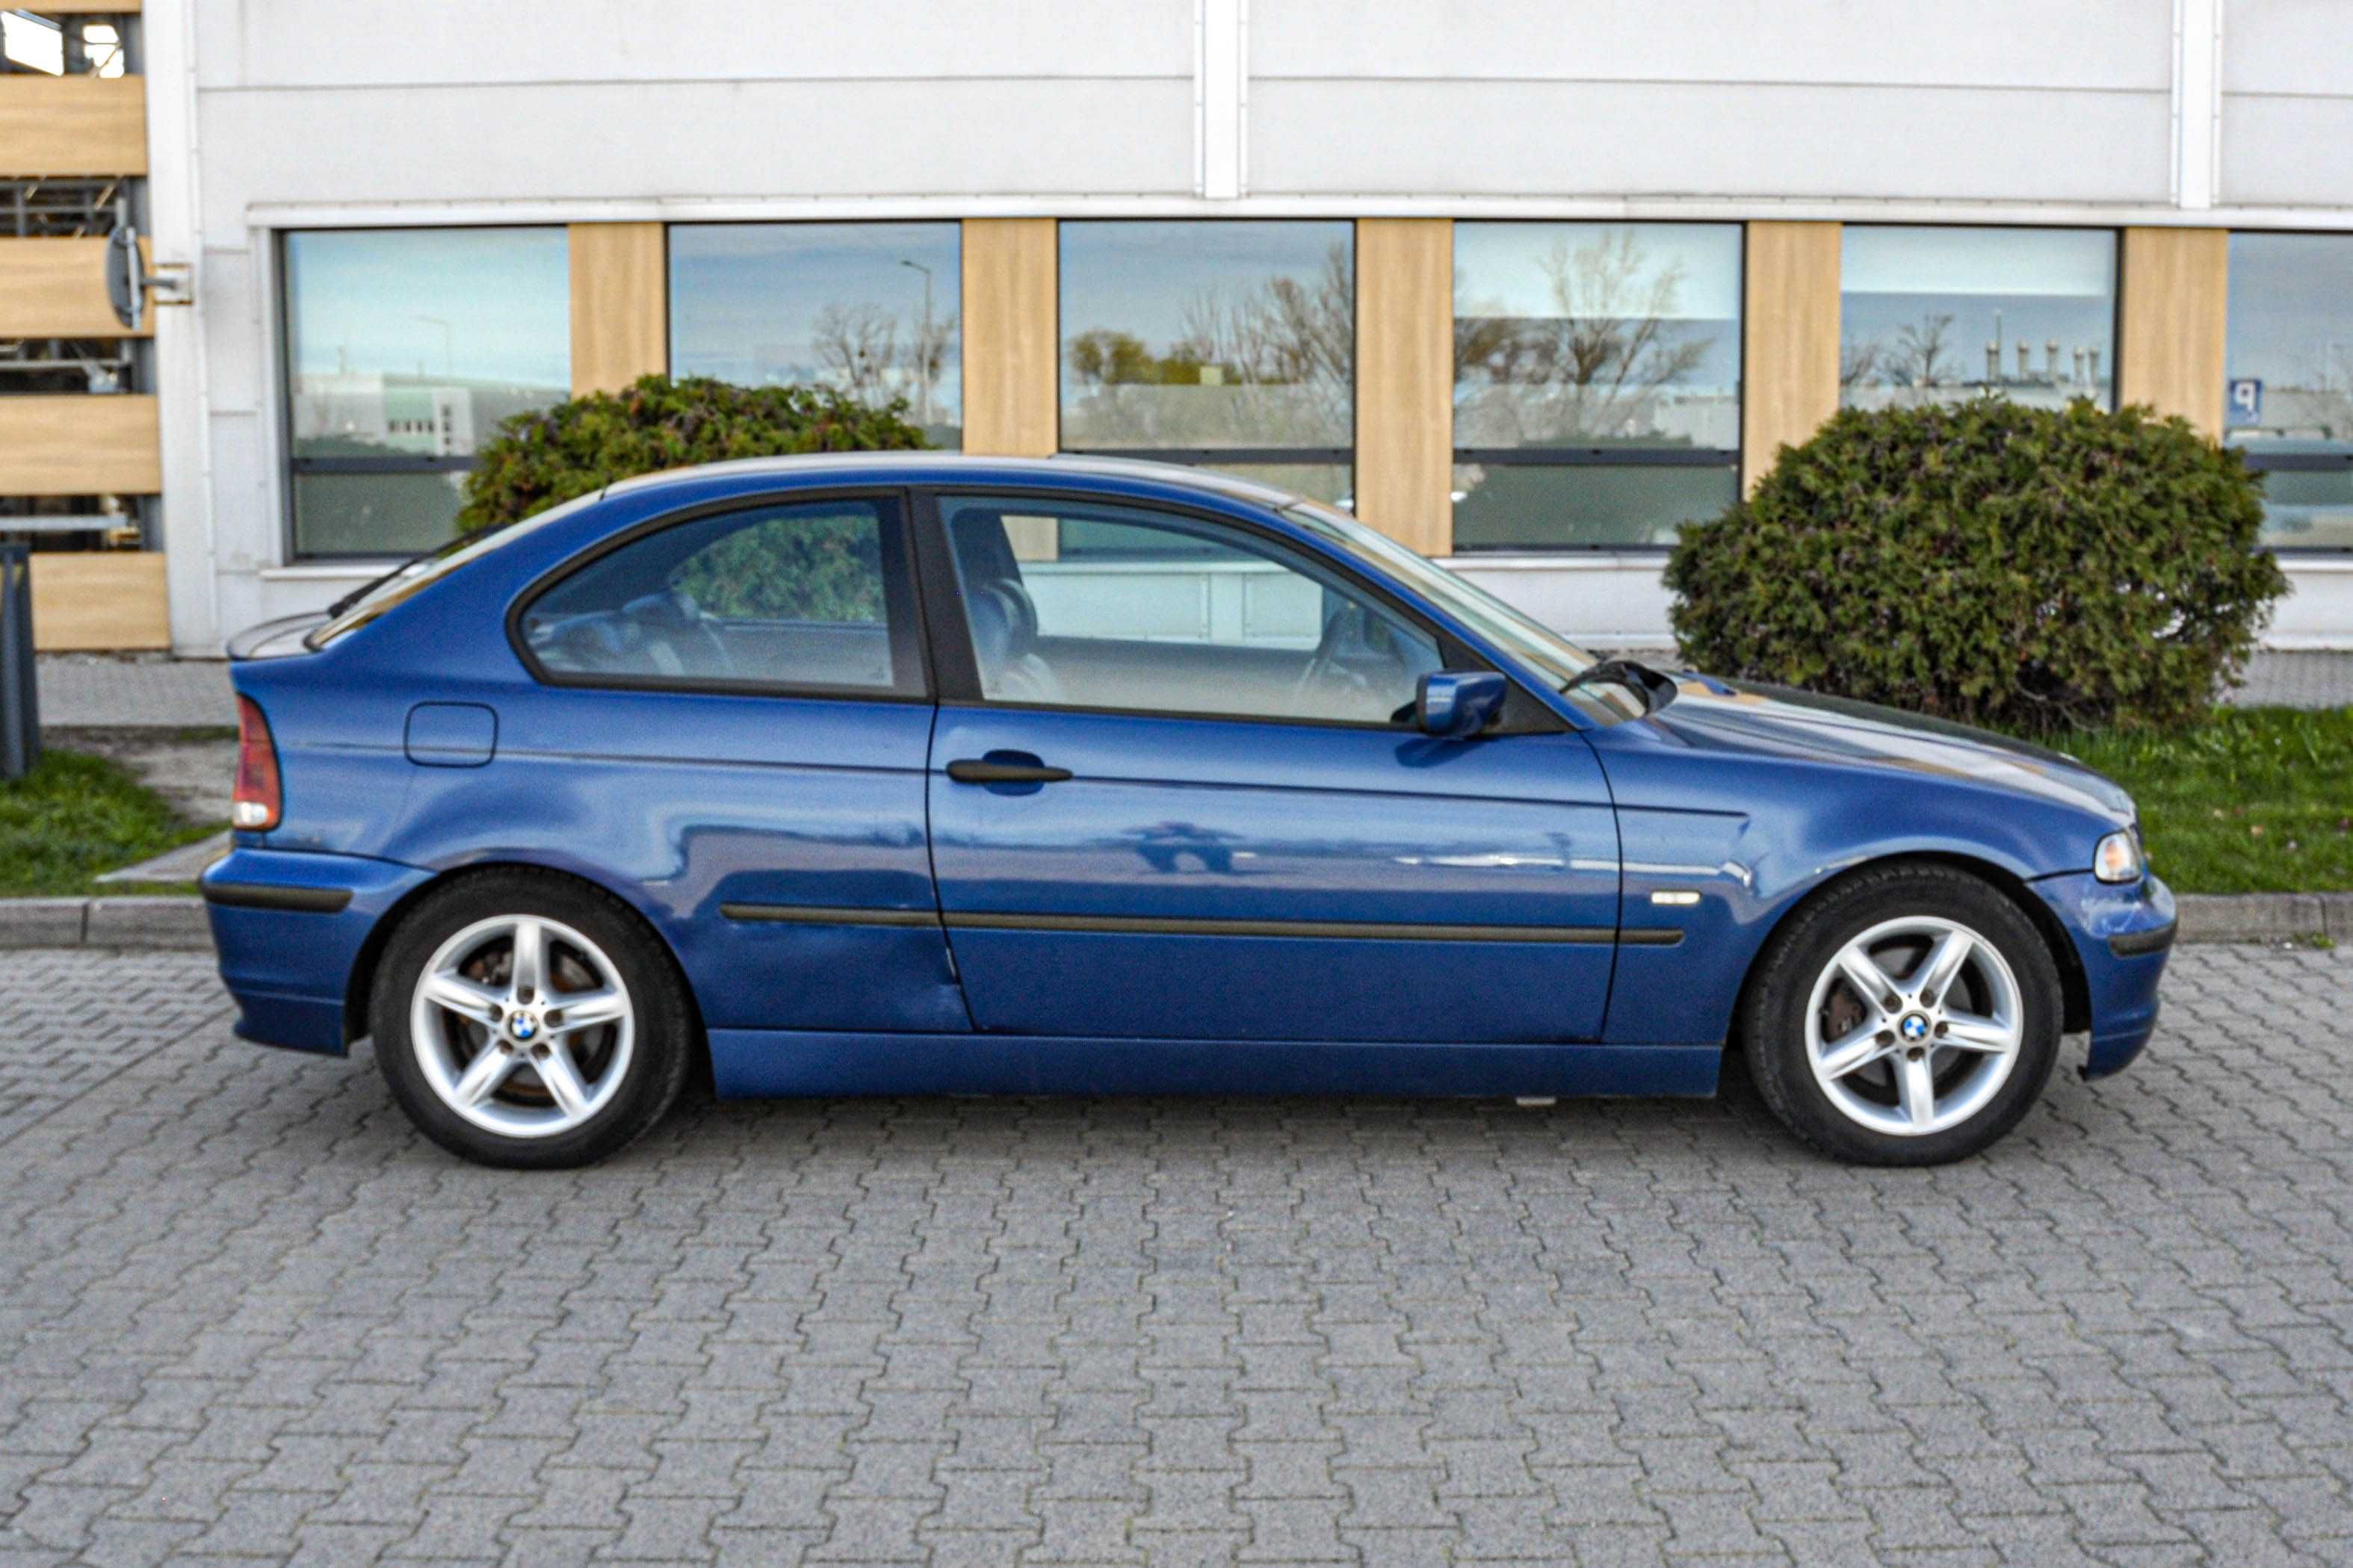 BMW Seria 3 1,8 (115KM)